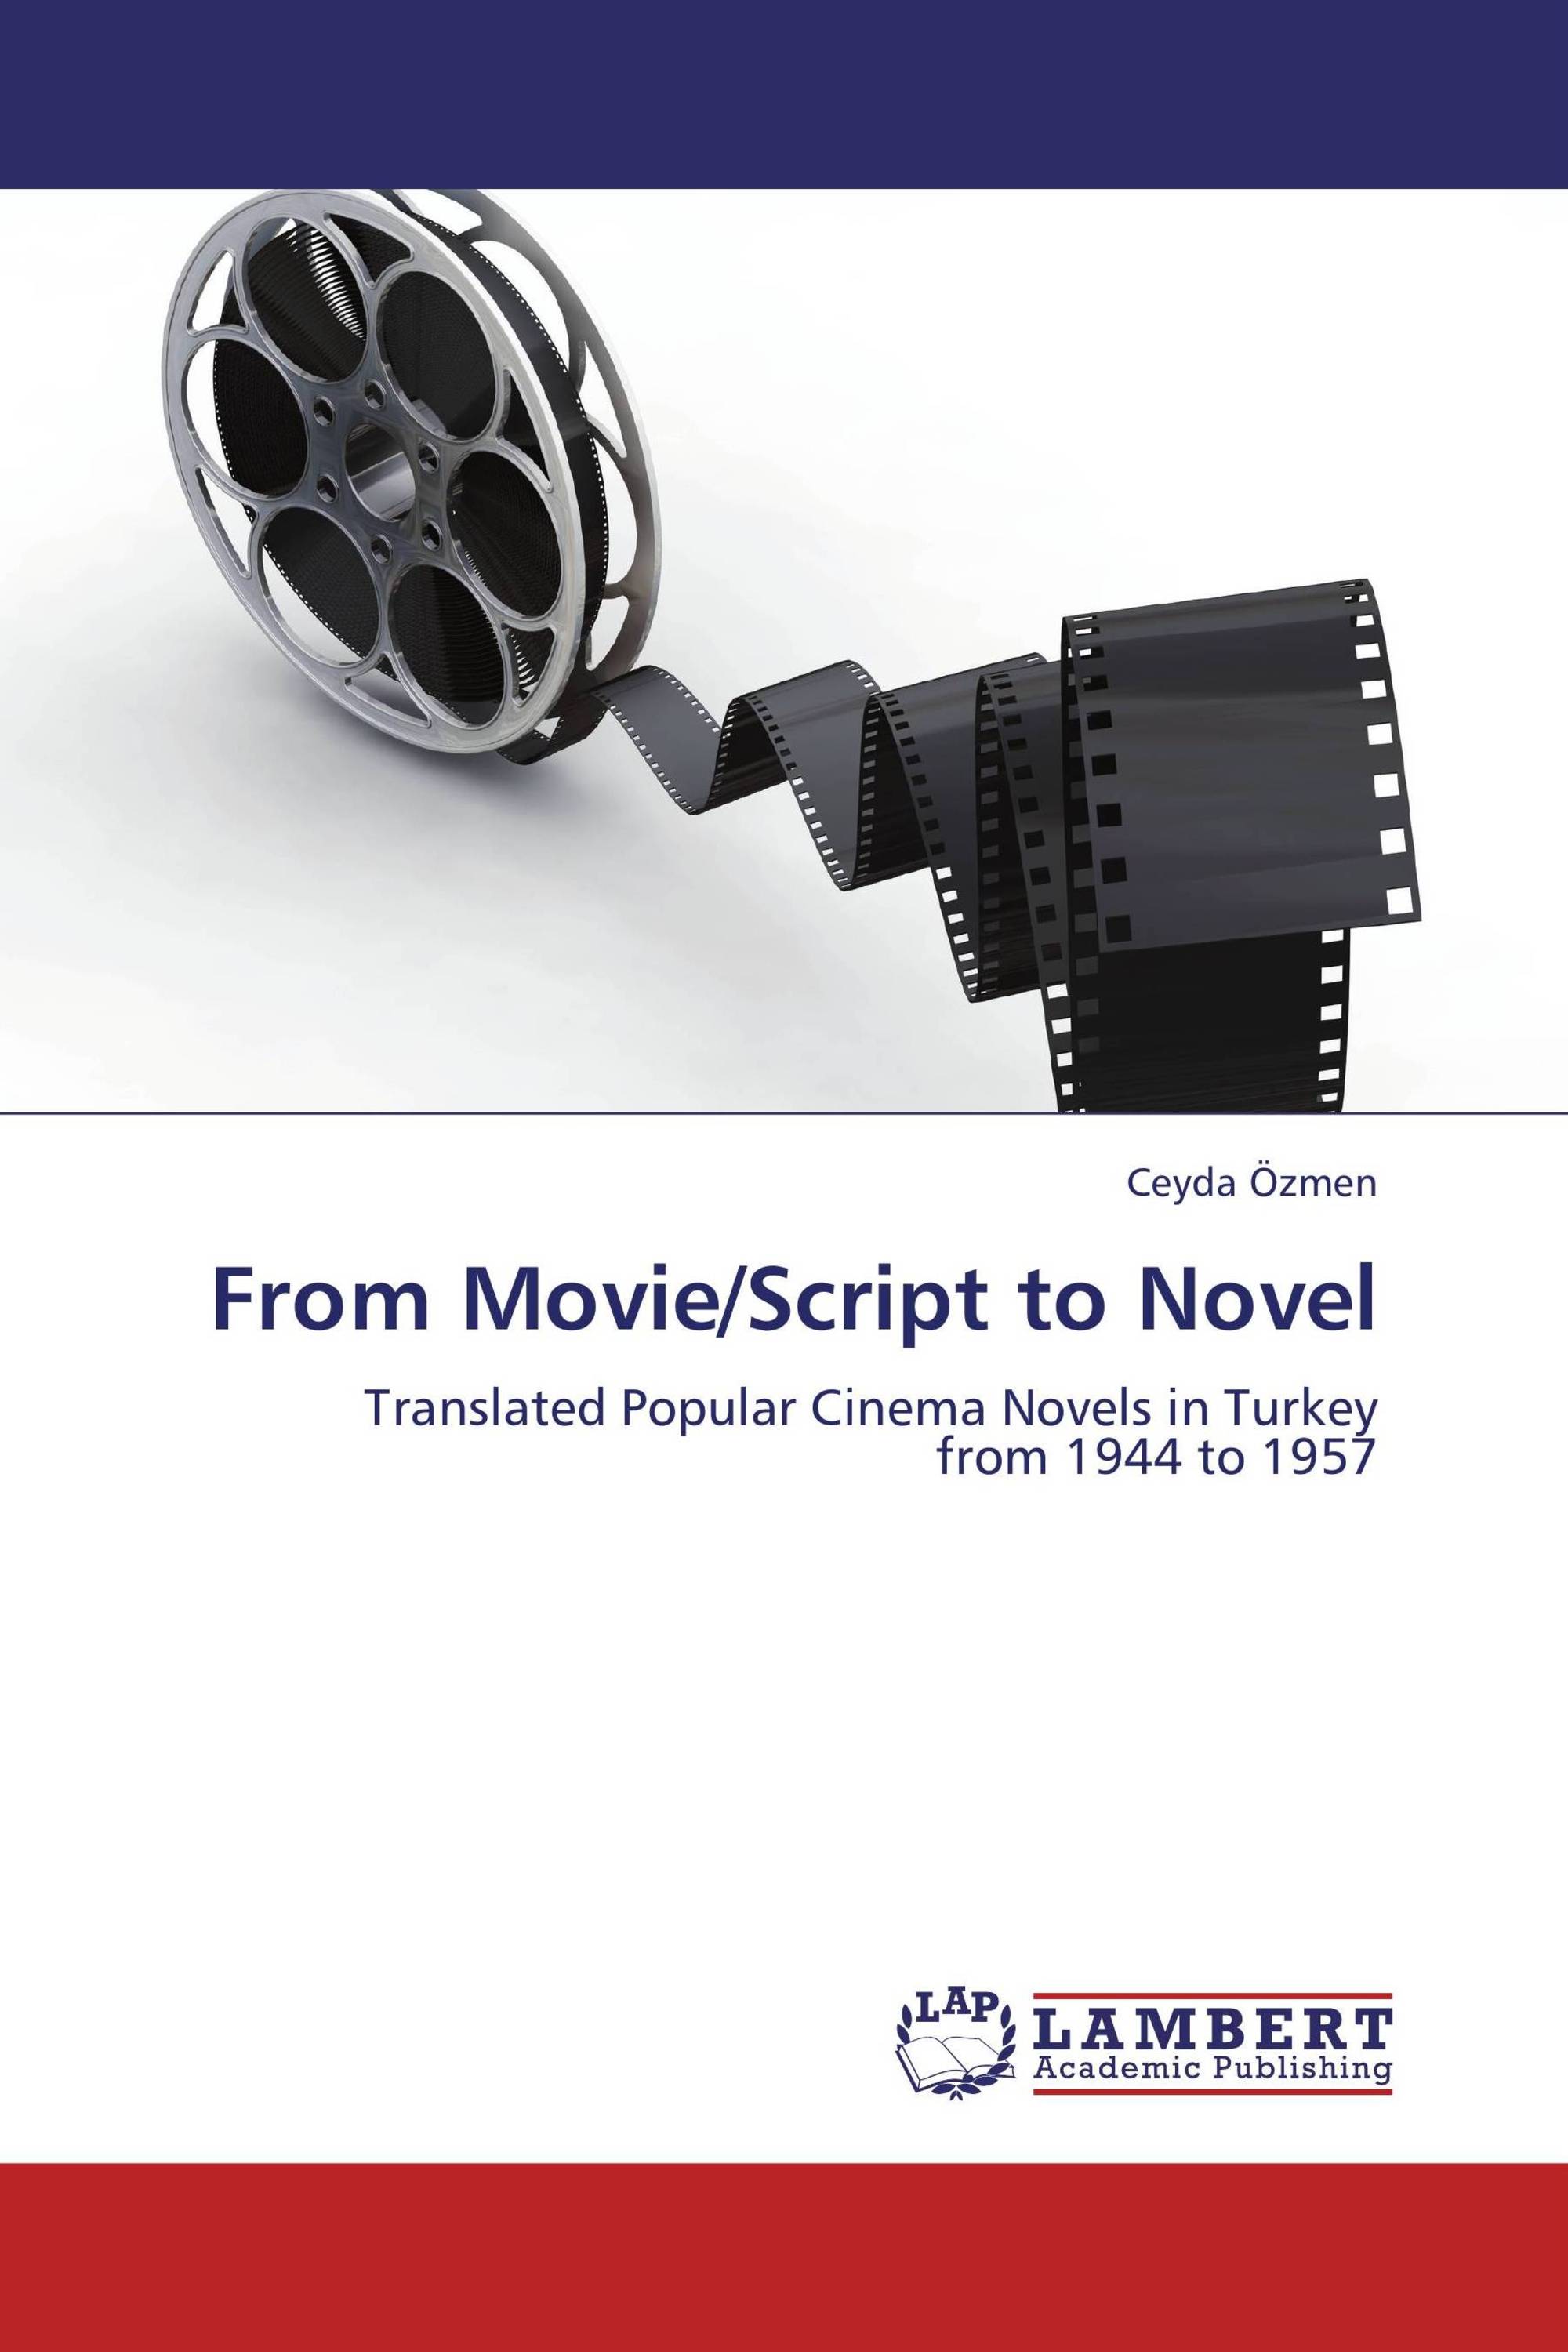 Movie script. Movie scripts